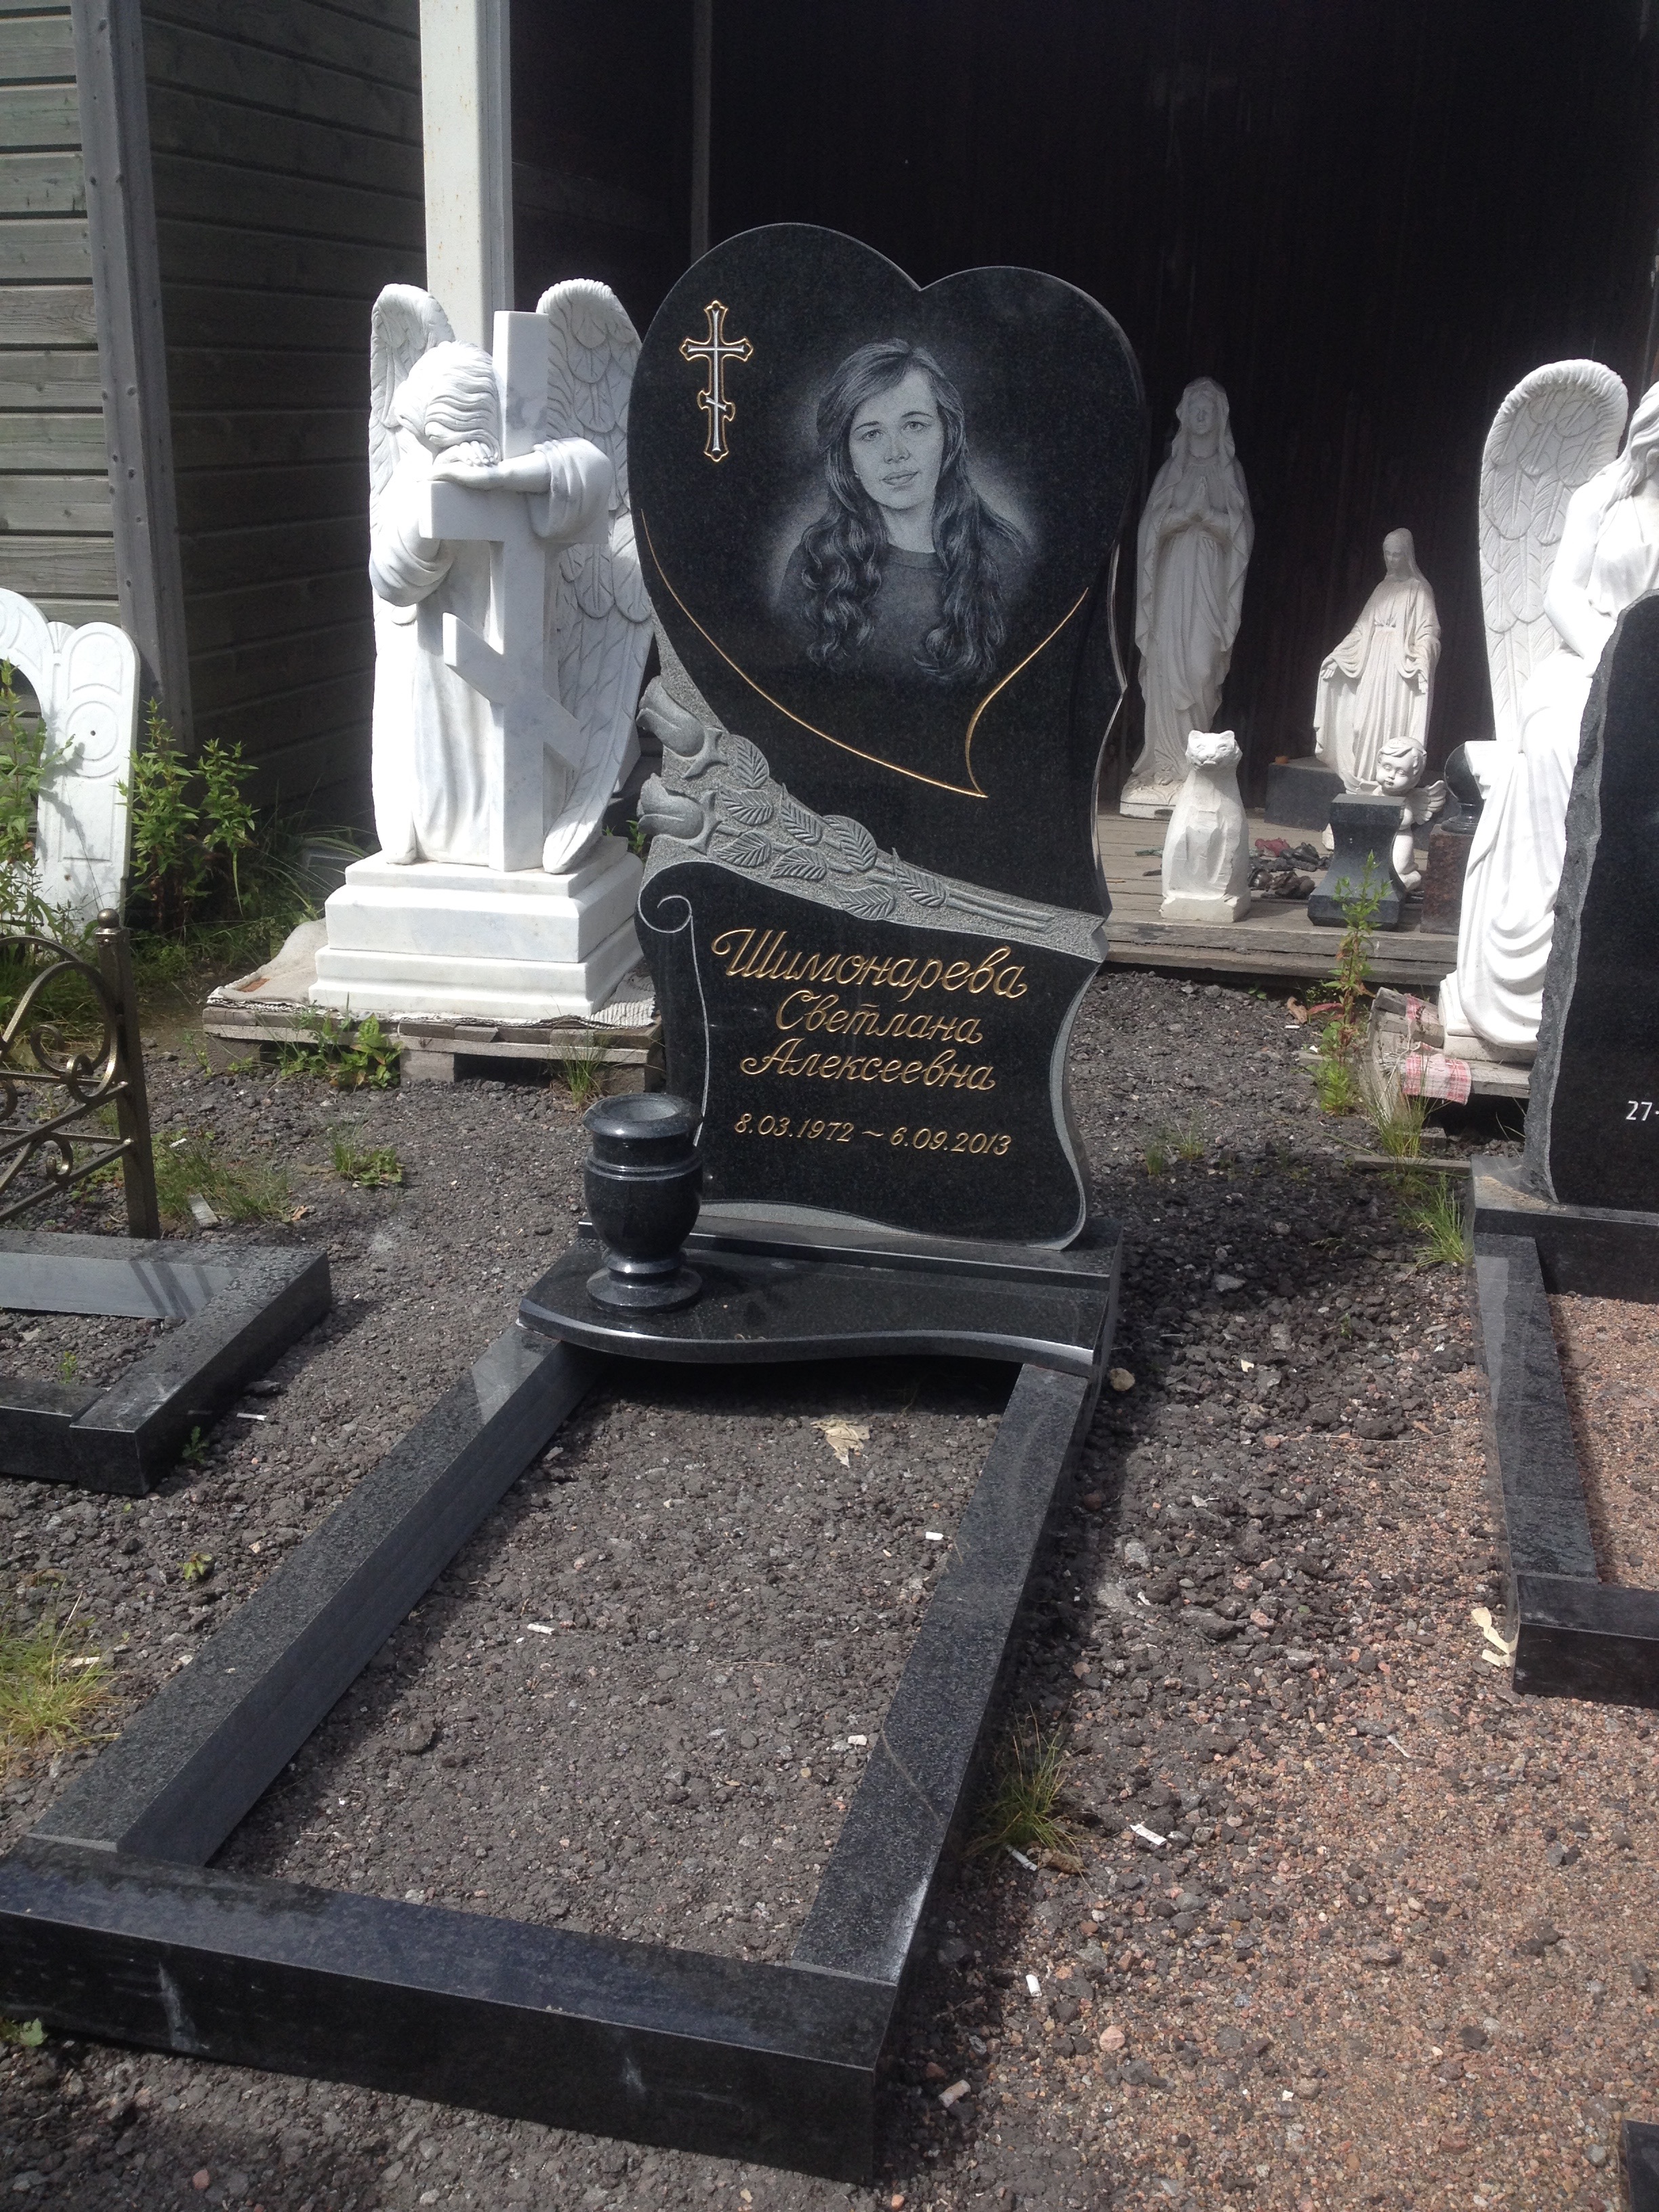 Памятники на могилу детские с ангелочками фото